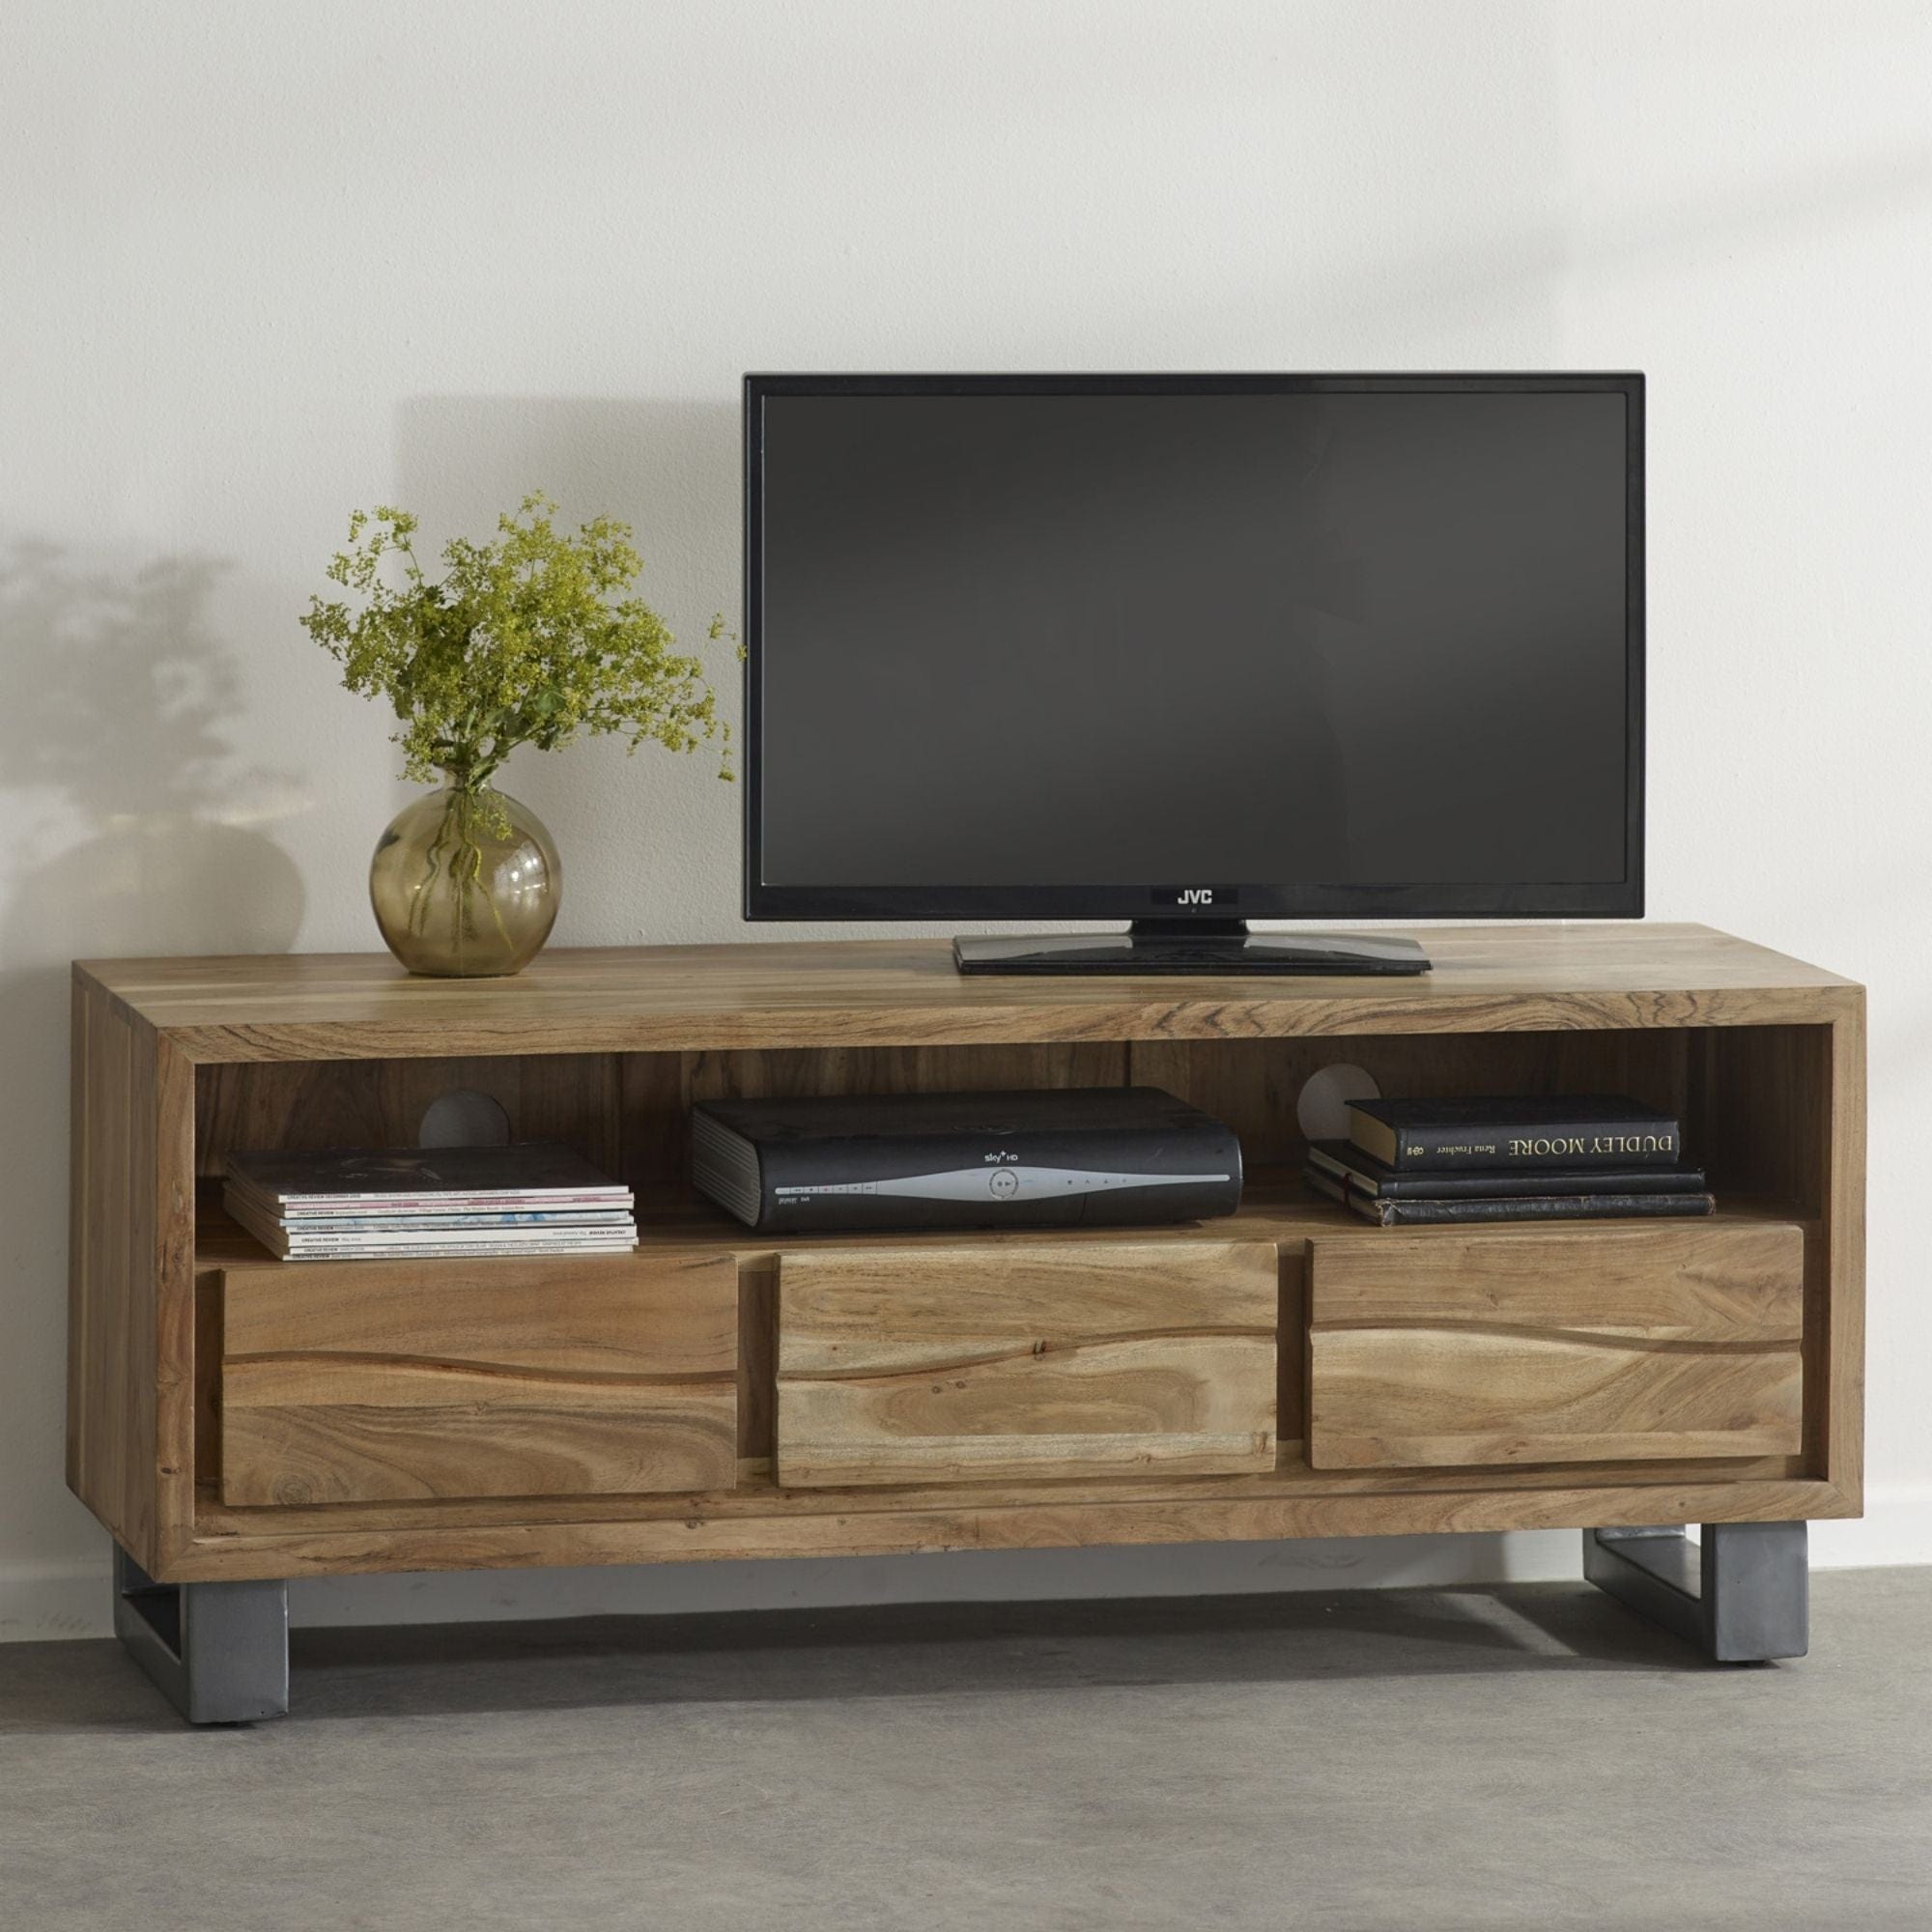 Live edge solid acacia wood TV stand with metal legs | malletandplane.com